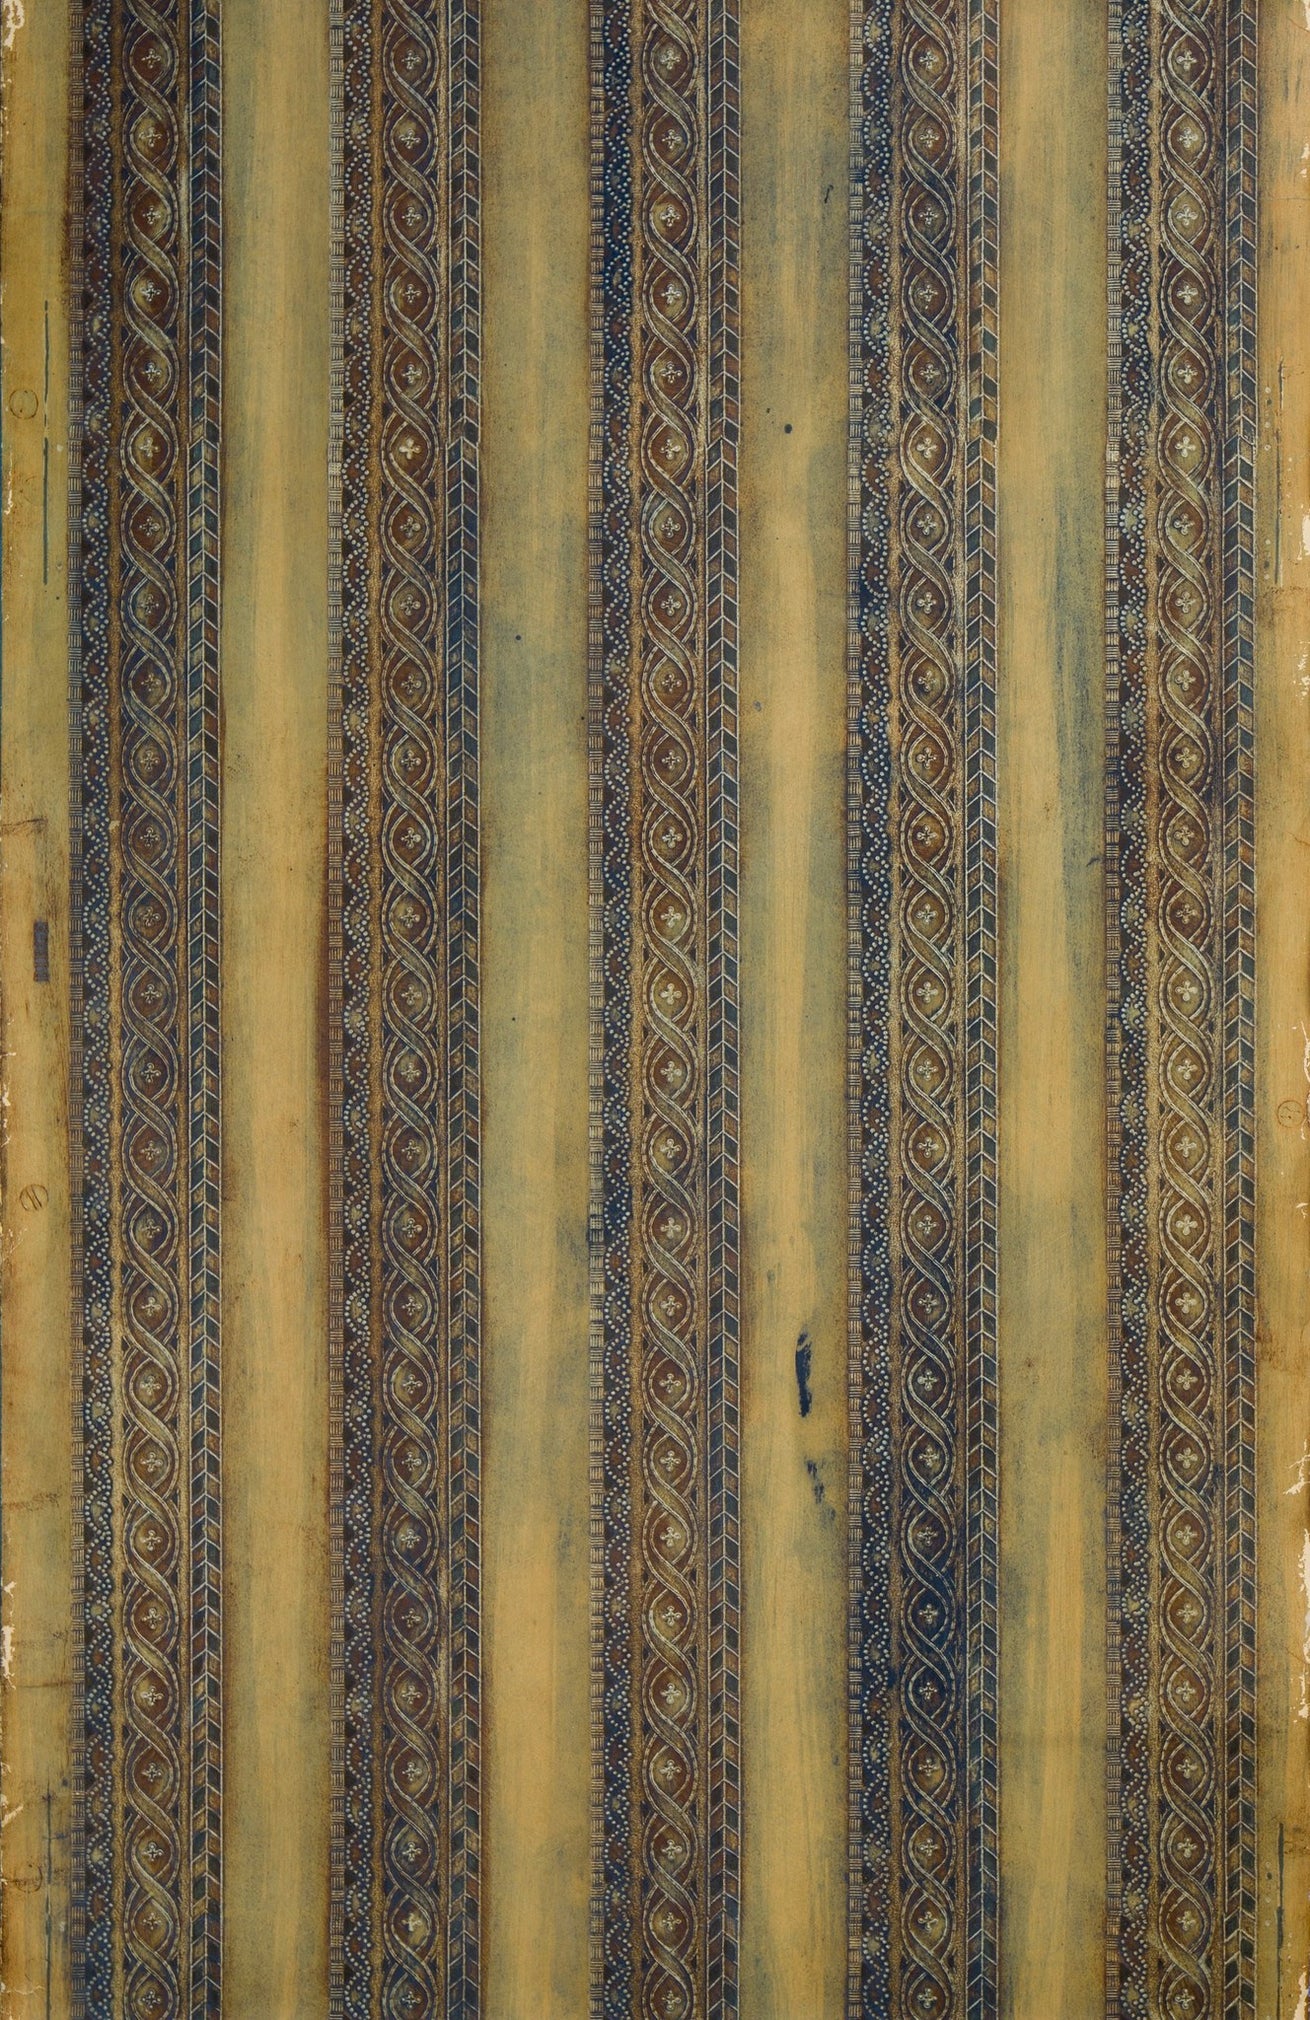 2-5/6" Embossed Leather Border - Antique Wallpaper Rolls